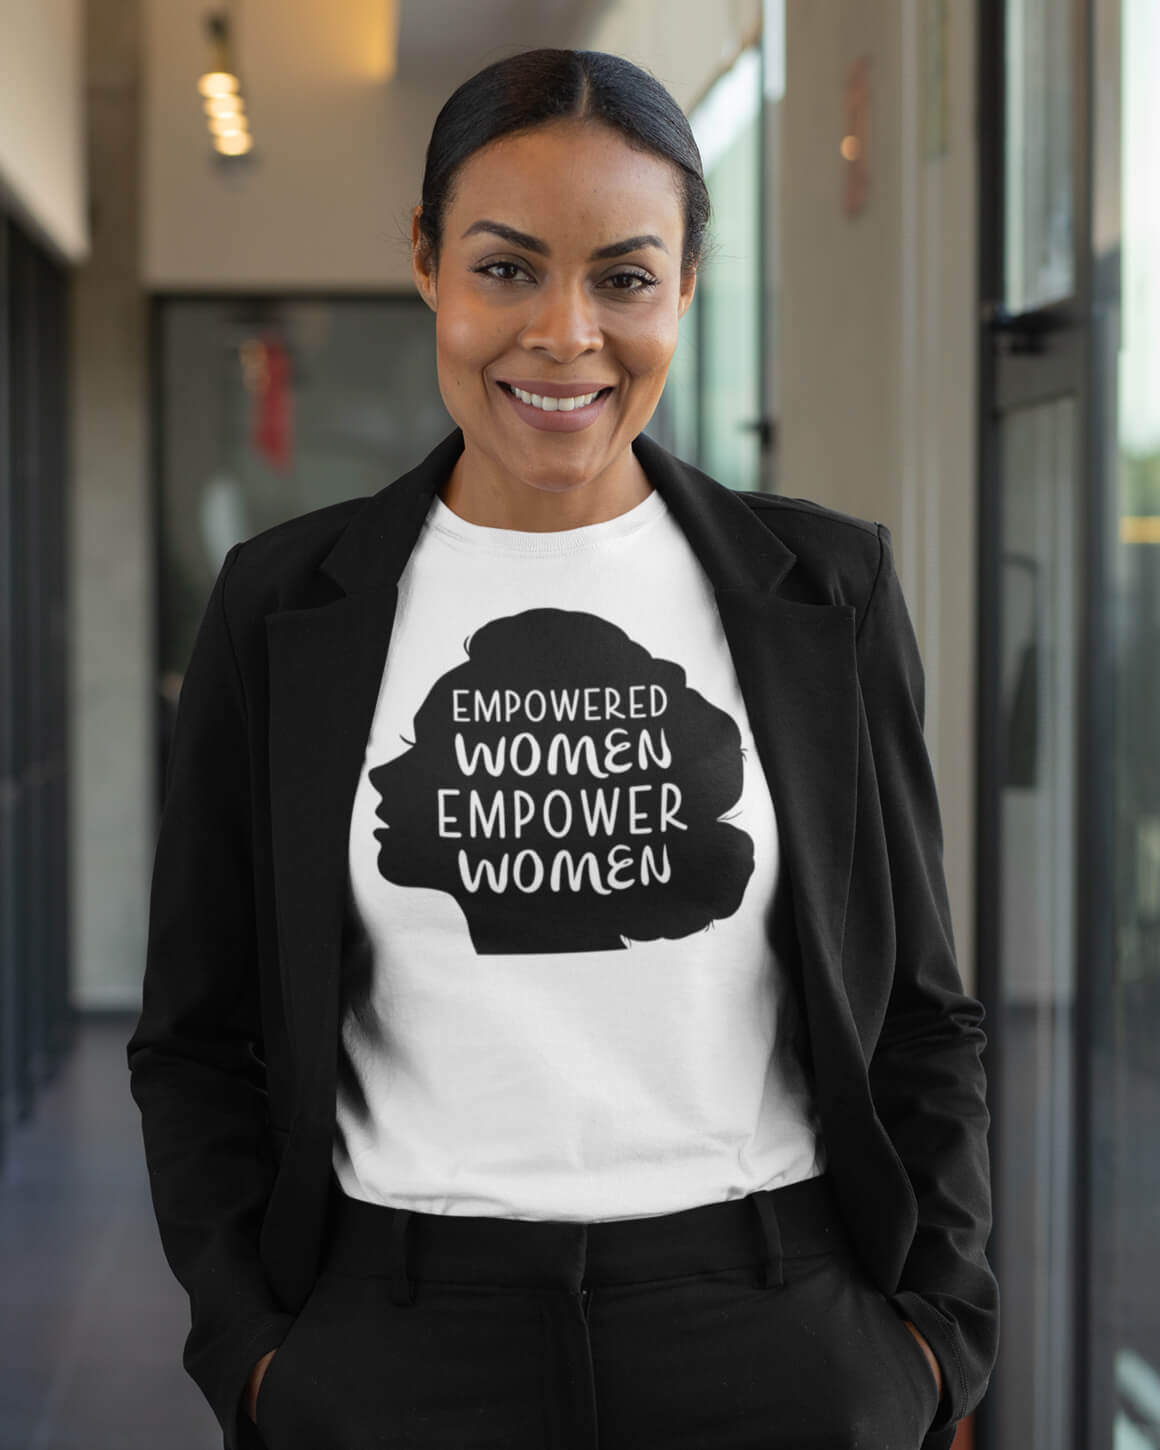 Woman wearing empowered women empower women shirt